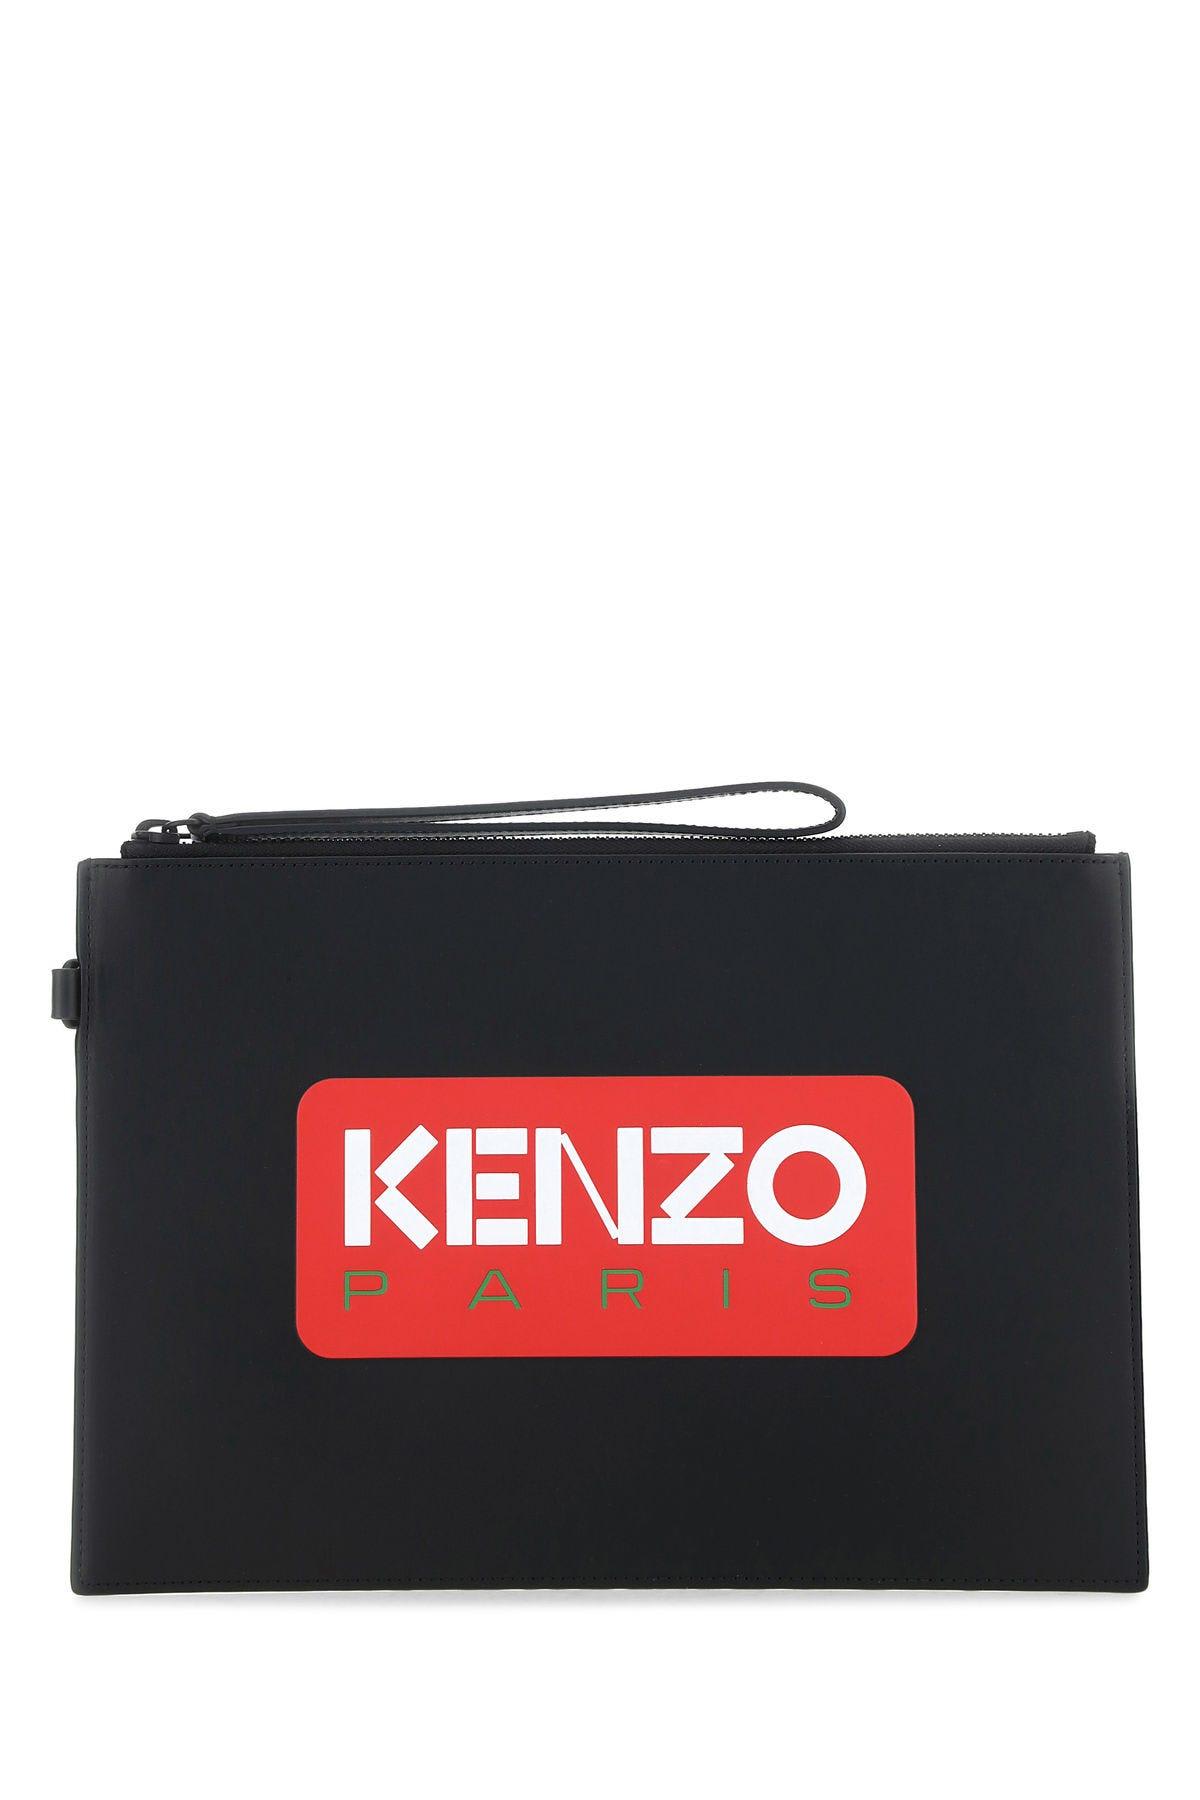 Kenzo Black Leather Large Paris Clutch